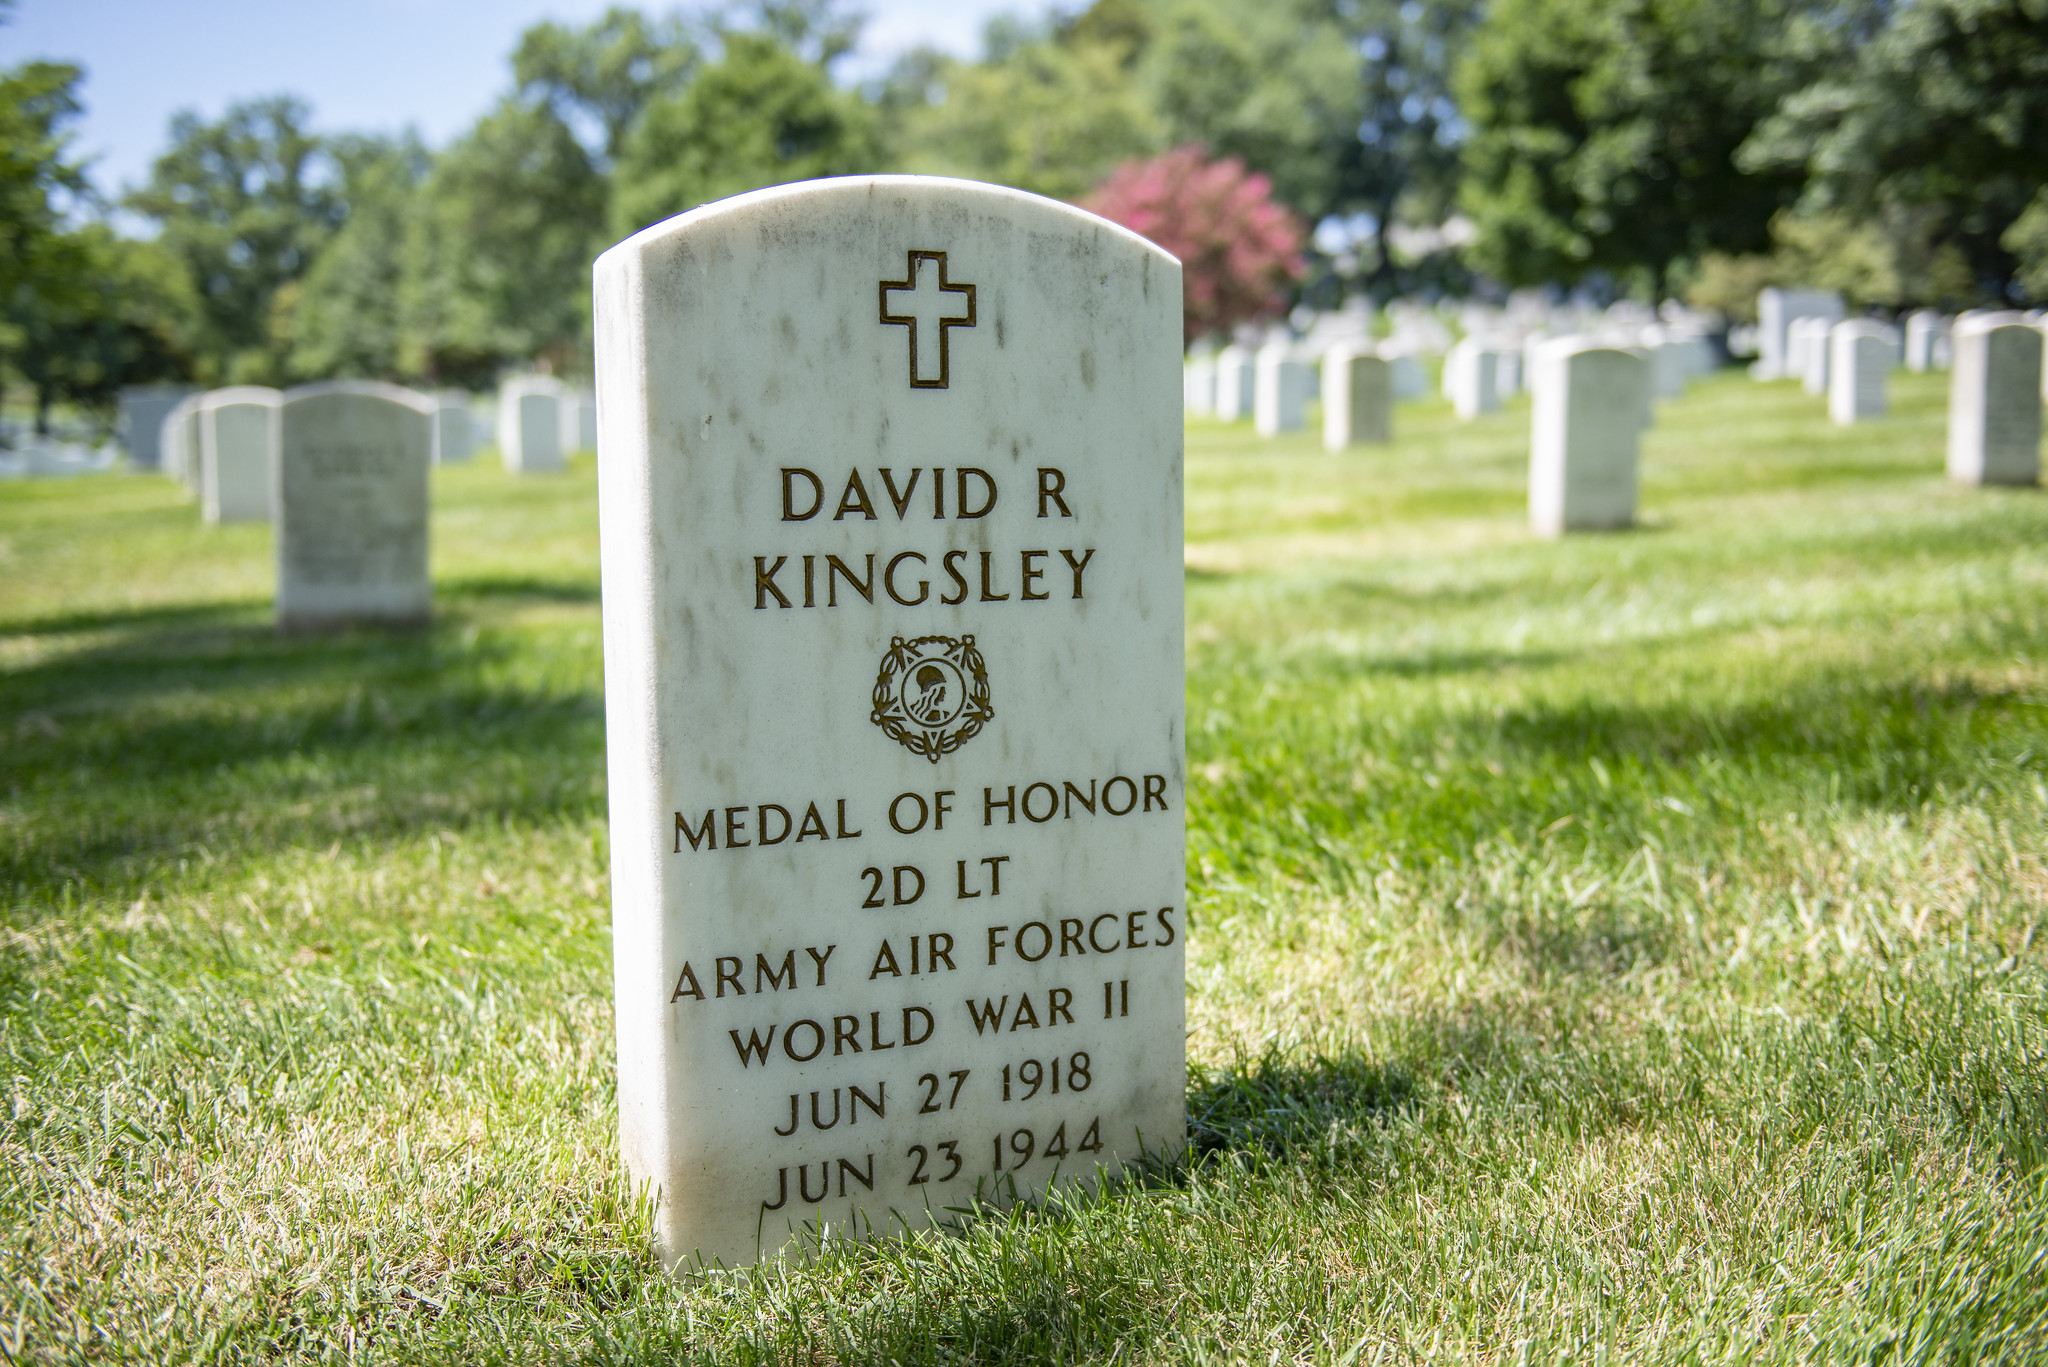 headstone of Medal of Honor recipient David R. Kingsley.